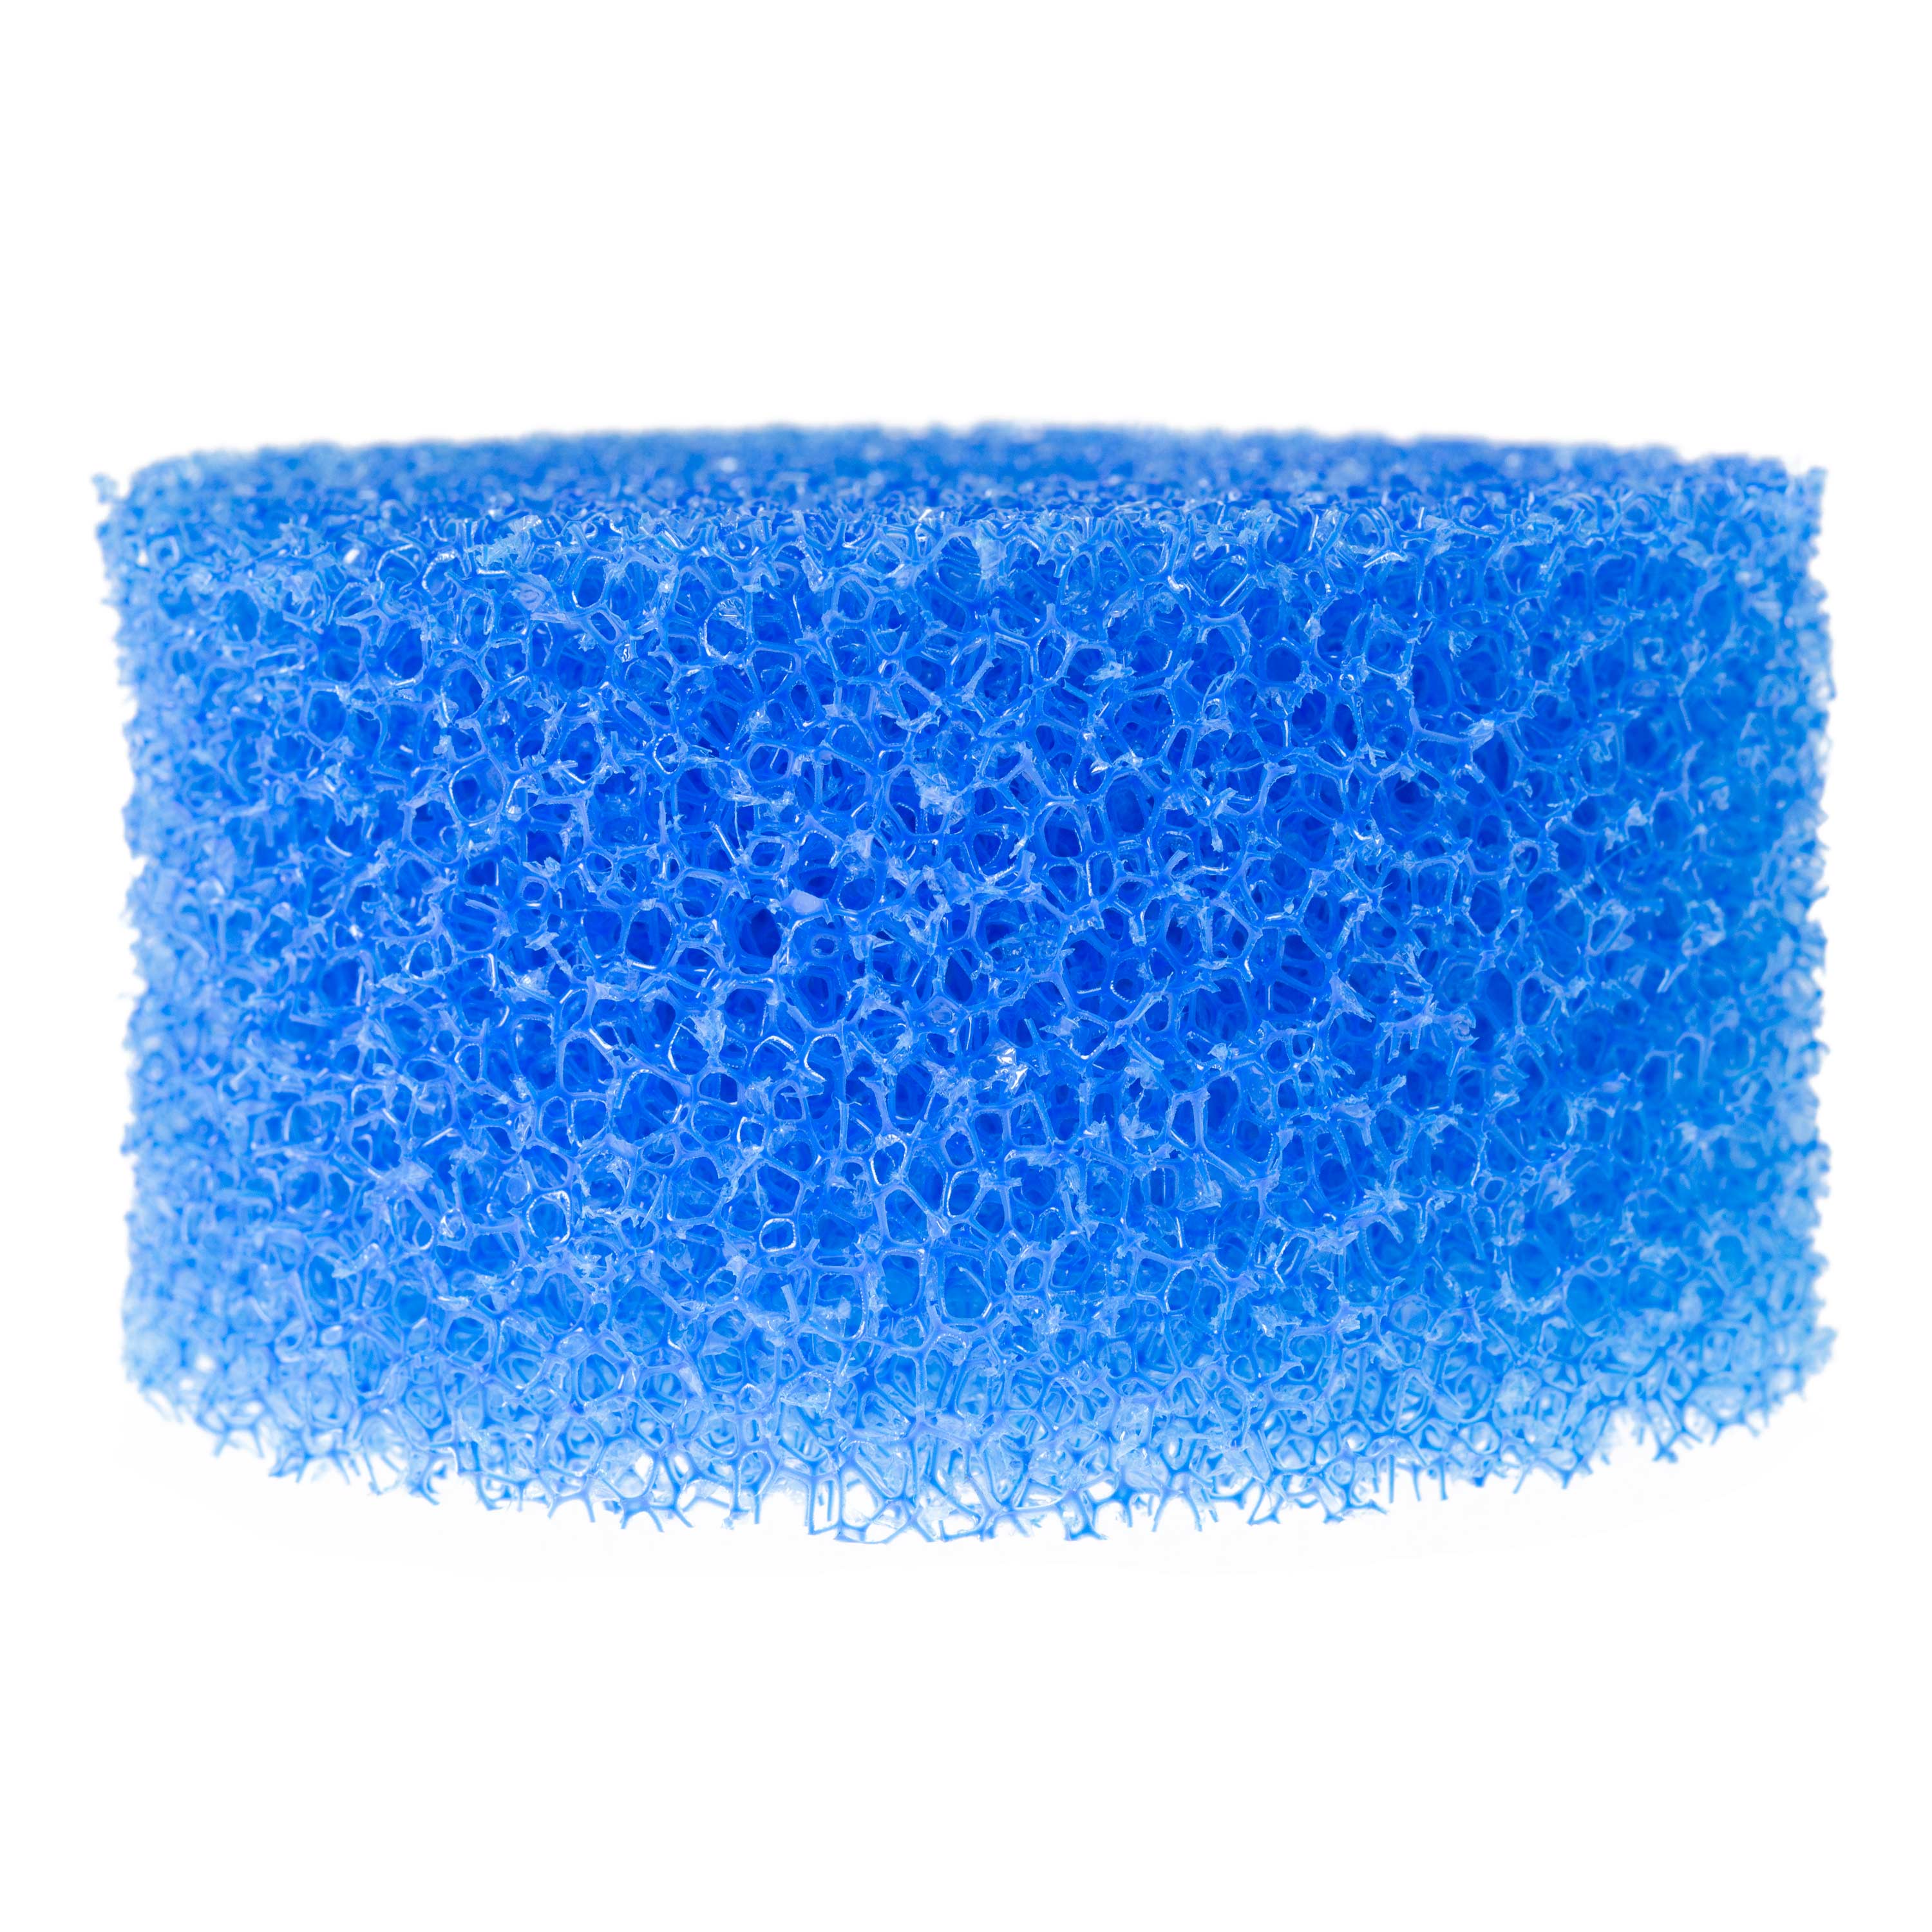 Filter Sponge, round, blue, 5 cm